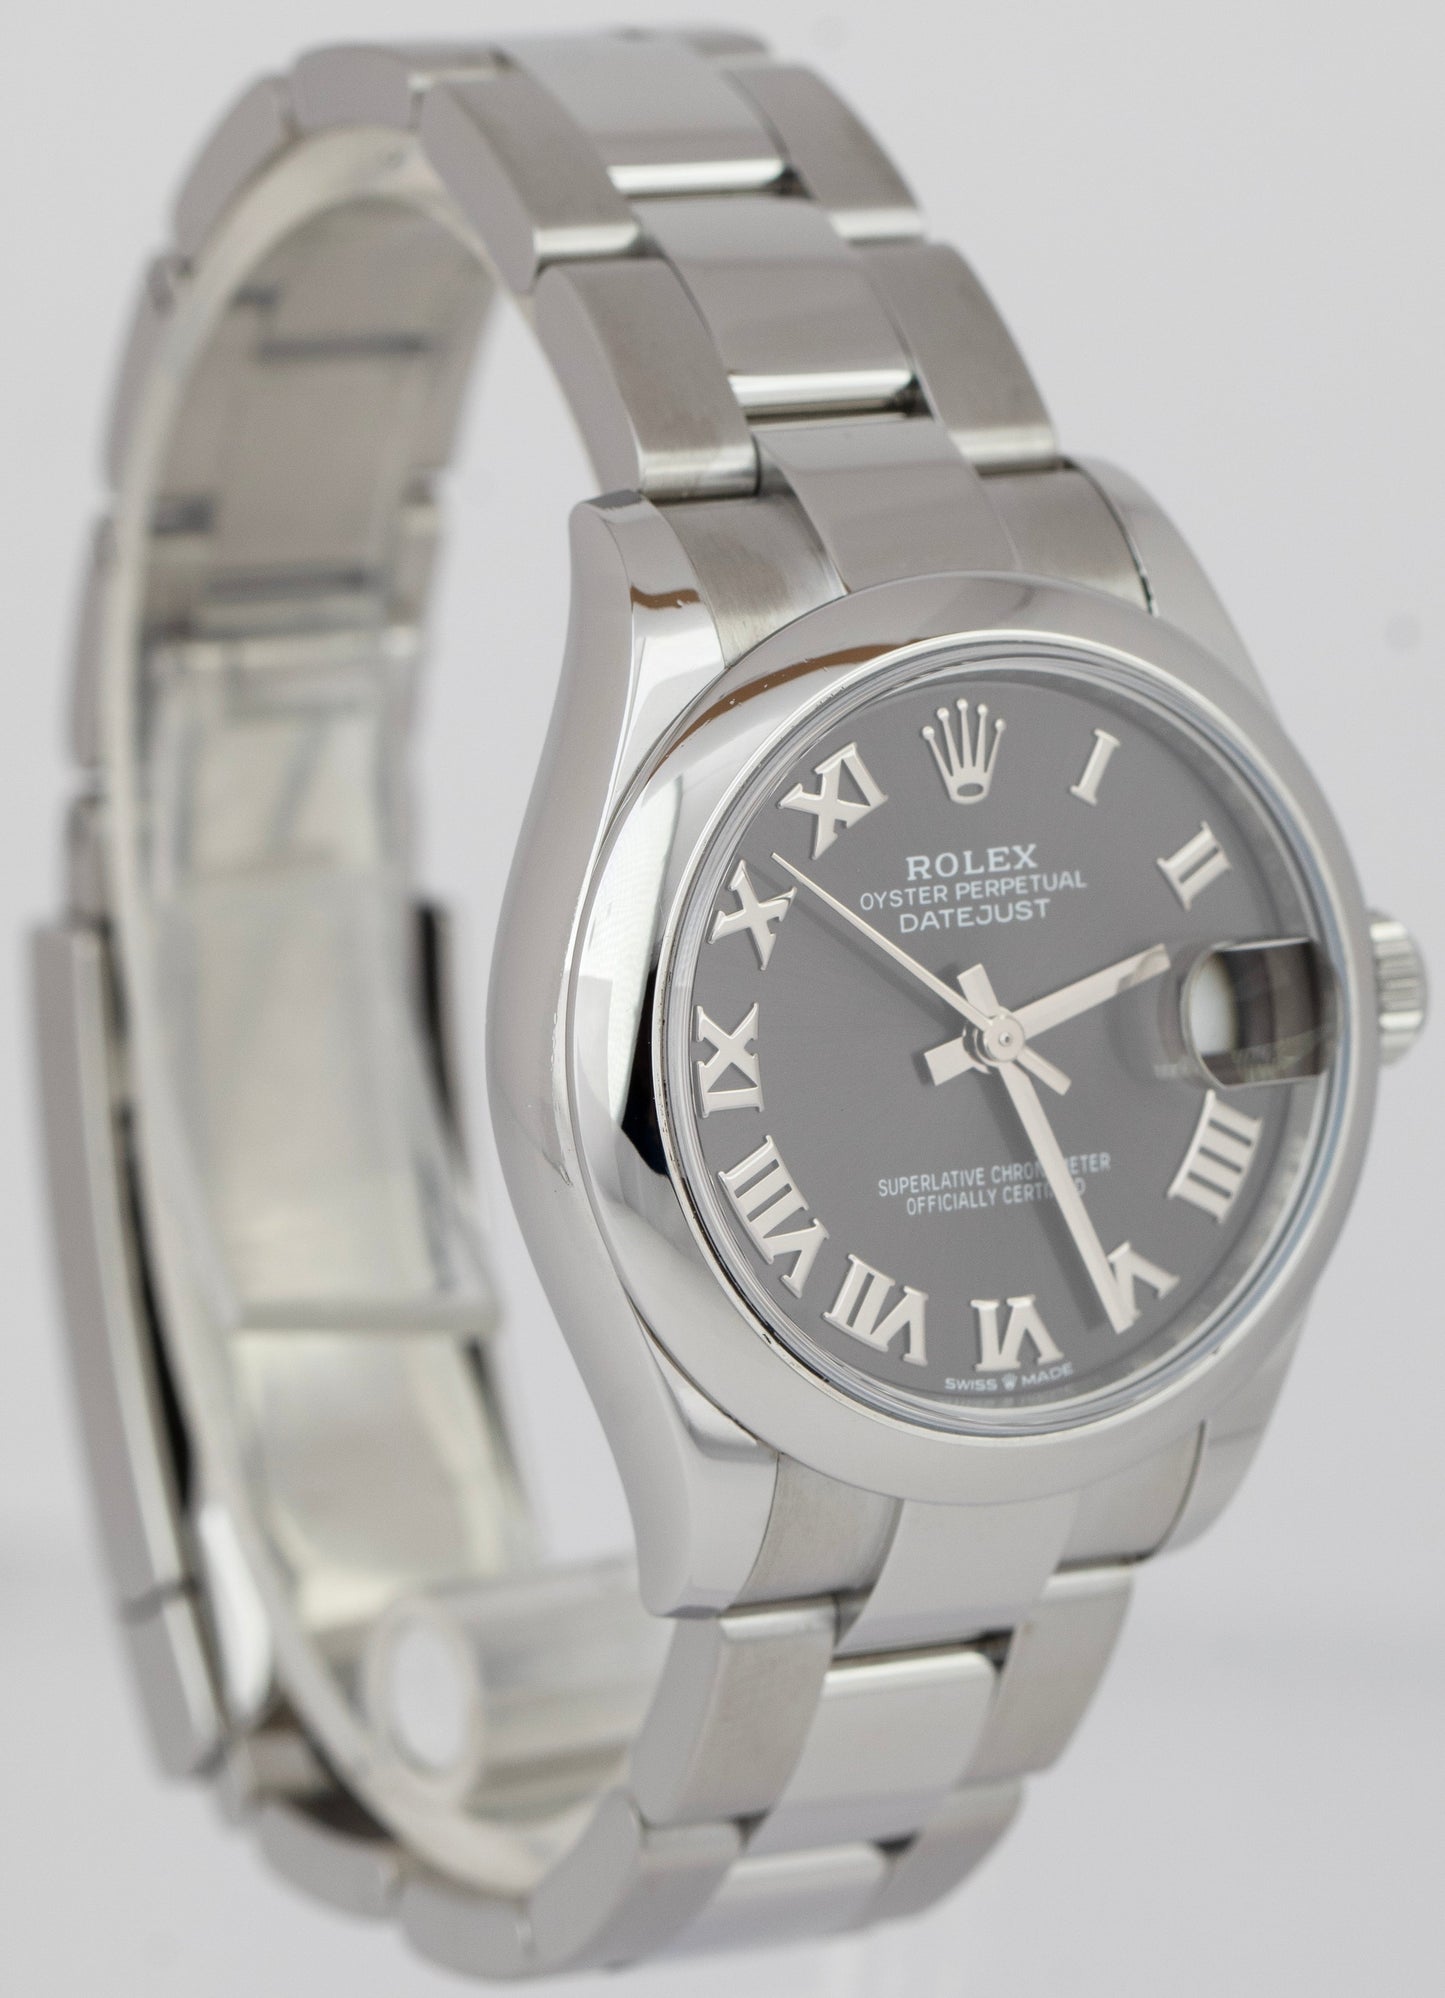 UNPOLISHED Rolex Daytona Cosmograph Black Stainless Chronograph 40mm Watch 16520